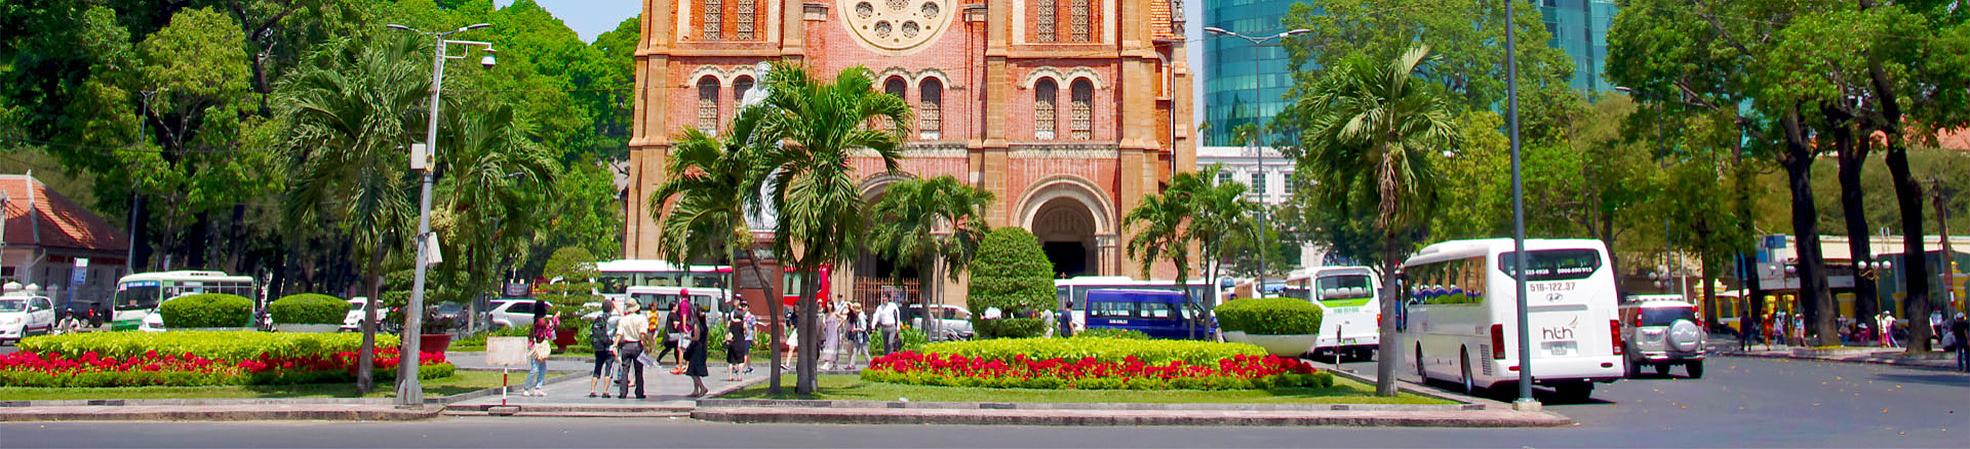 Notre Dame Cathedral, Hanoi Vietnam